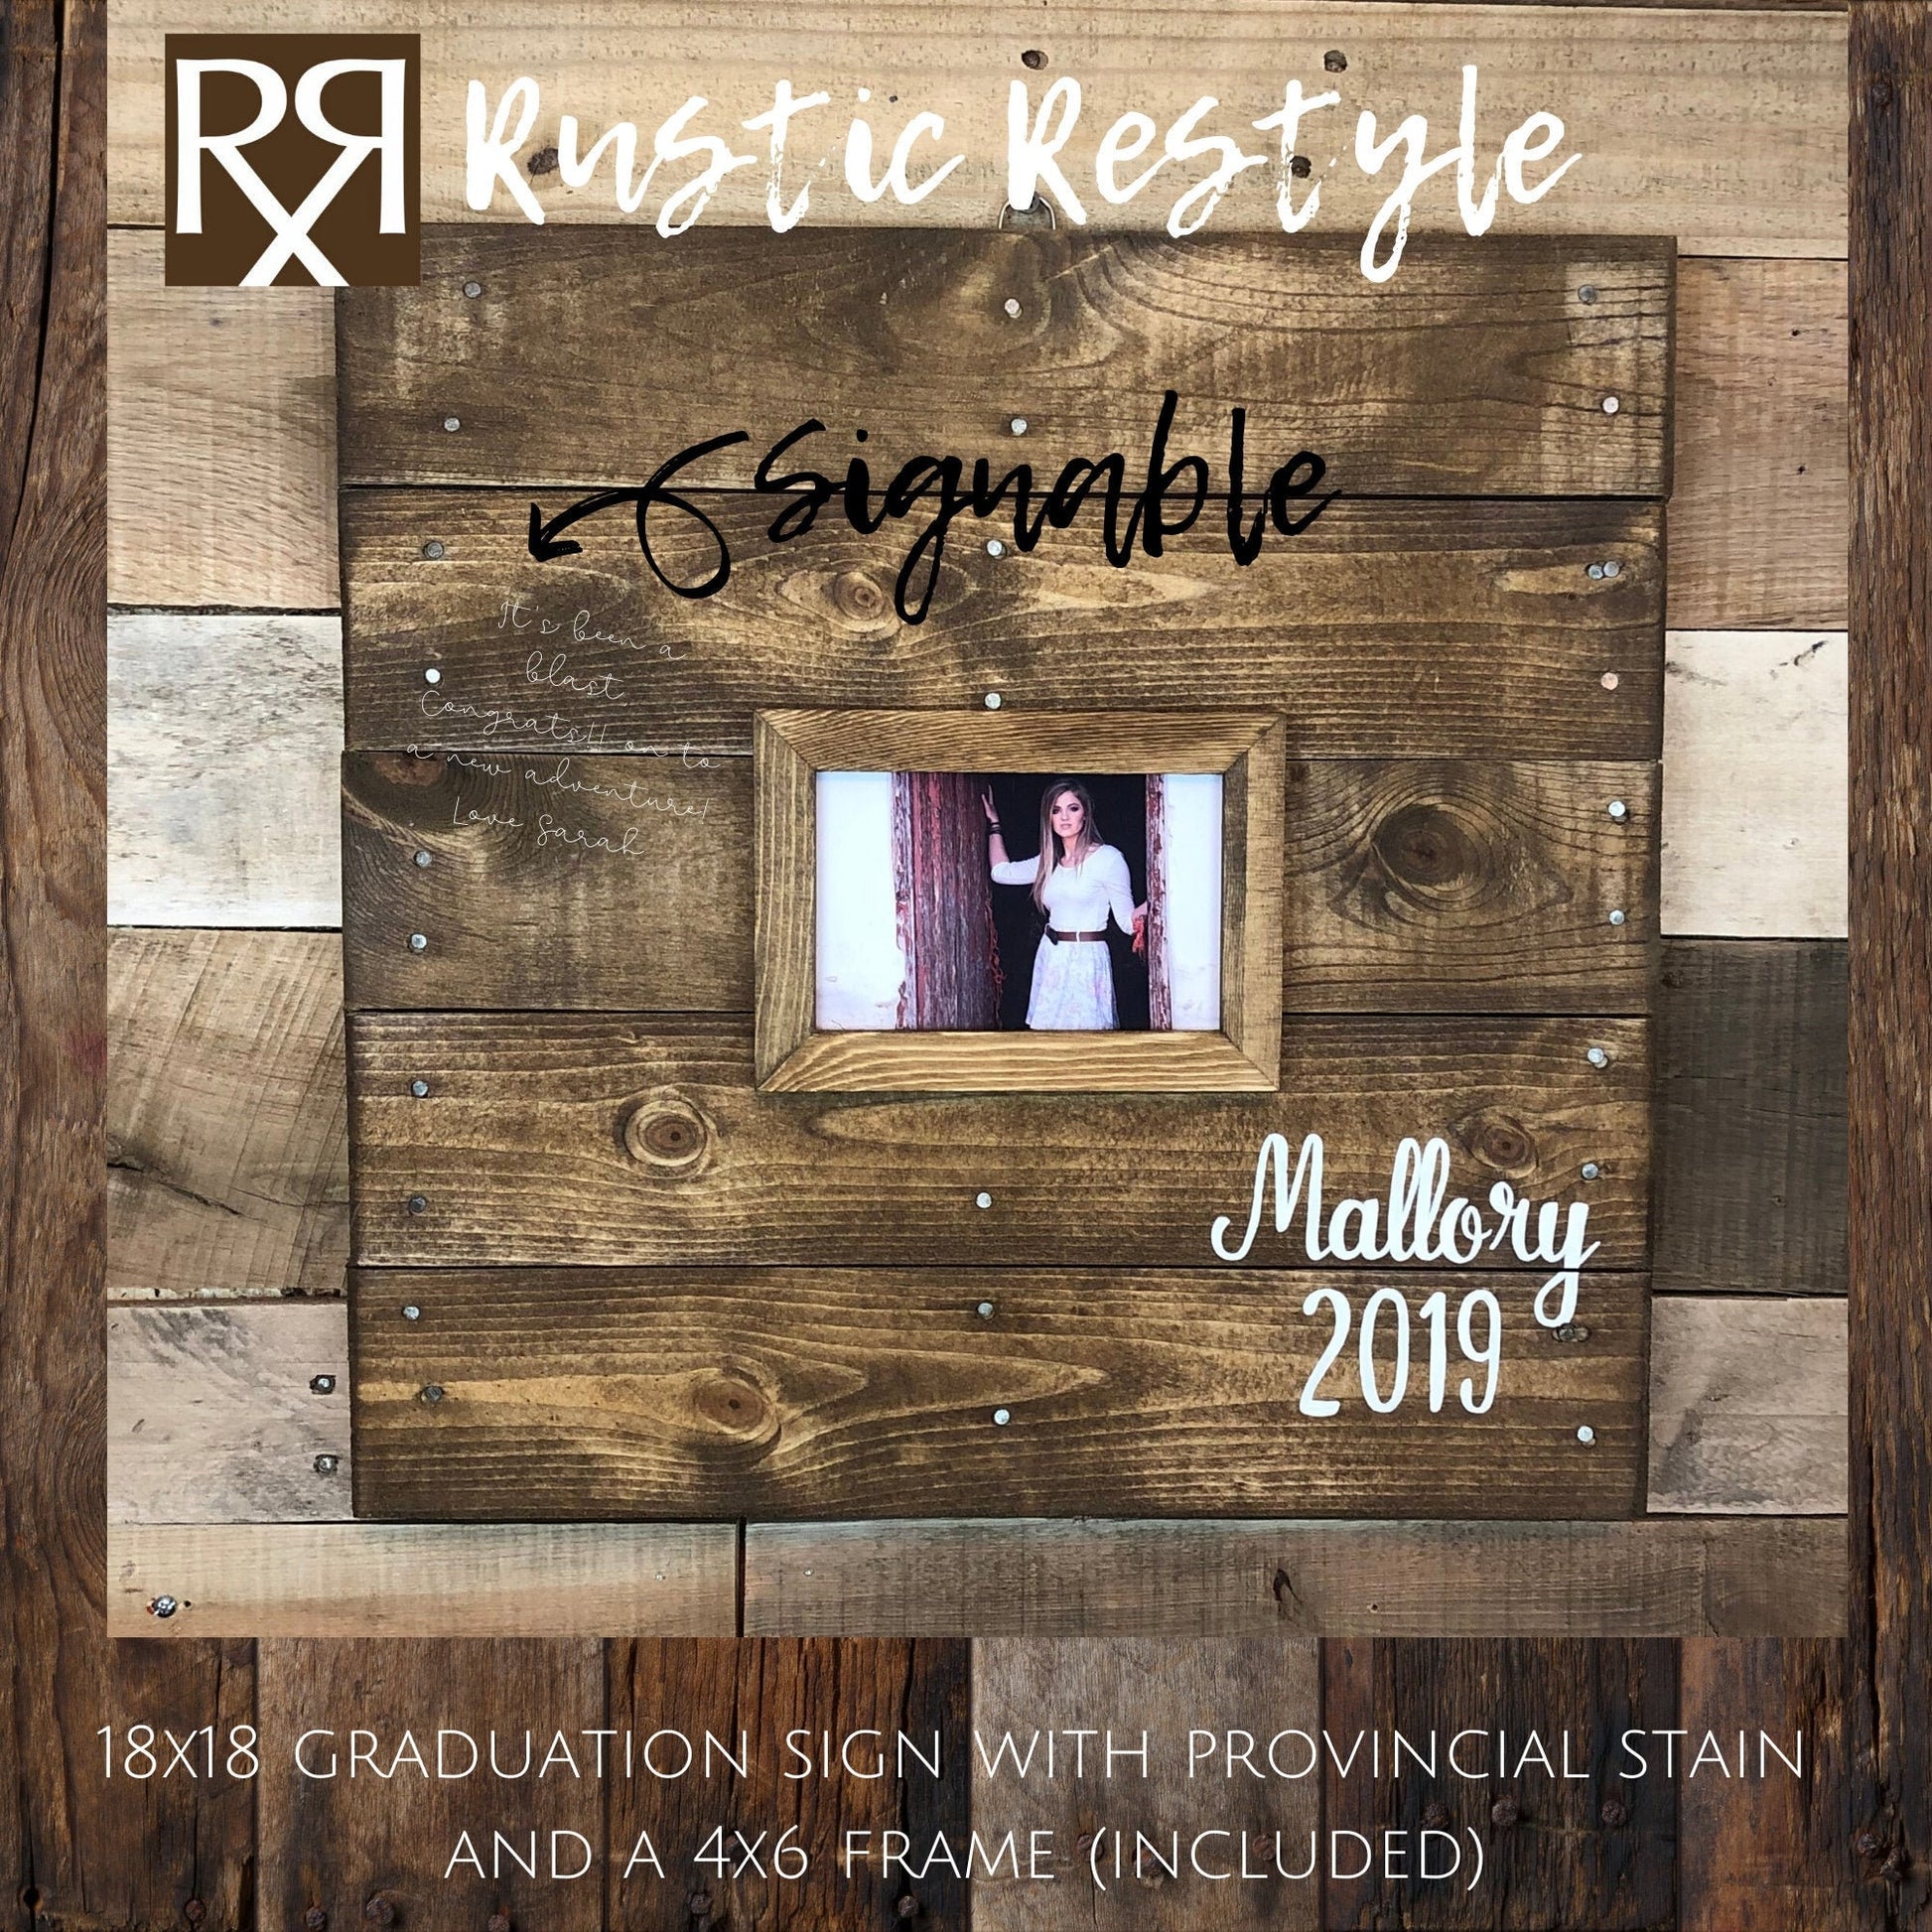 graduation guest book, party book, Creative Guest book alternative, cl –  Rustic Restyle